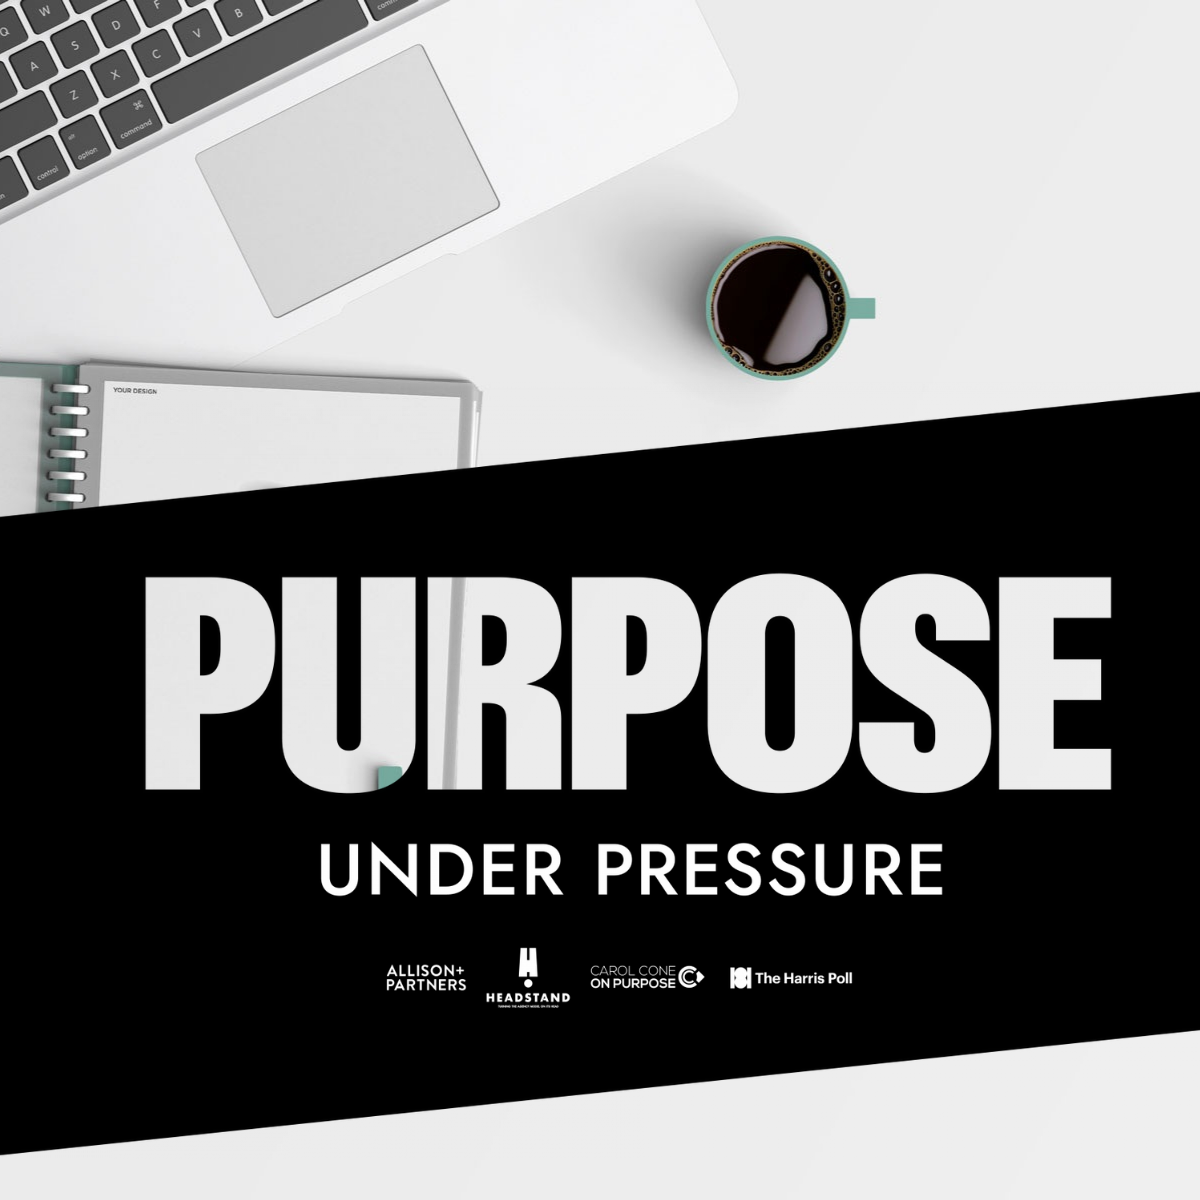 "purpose under pressure" with desk tools